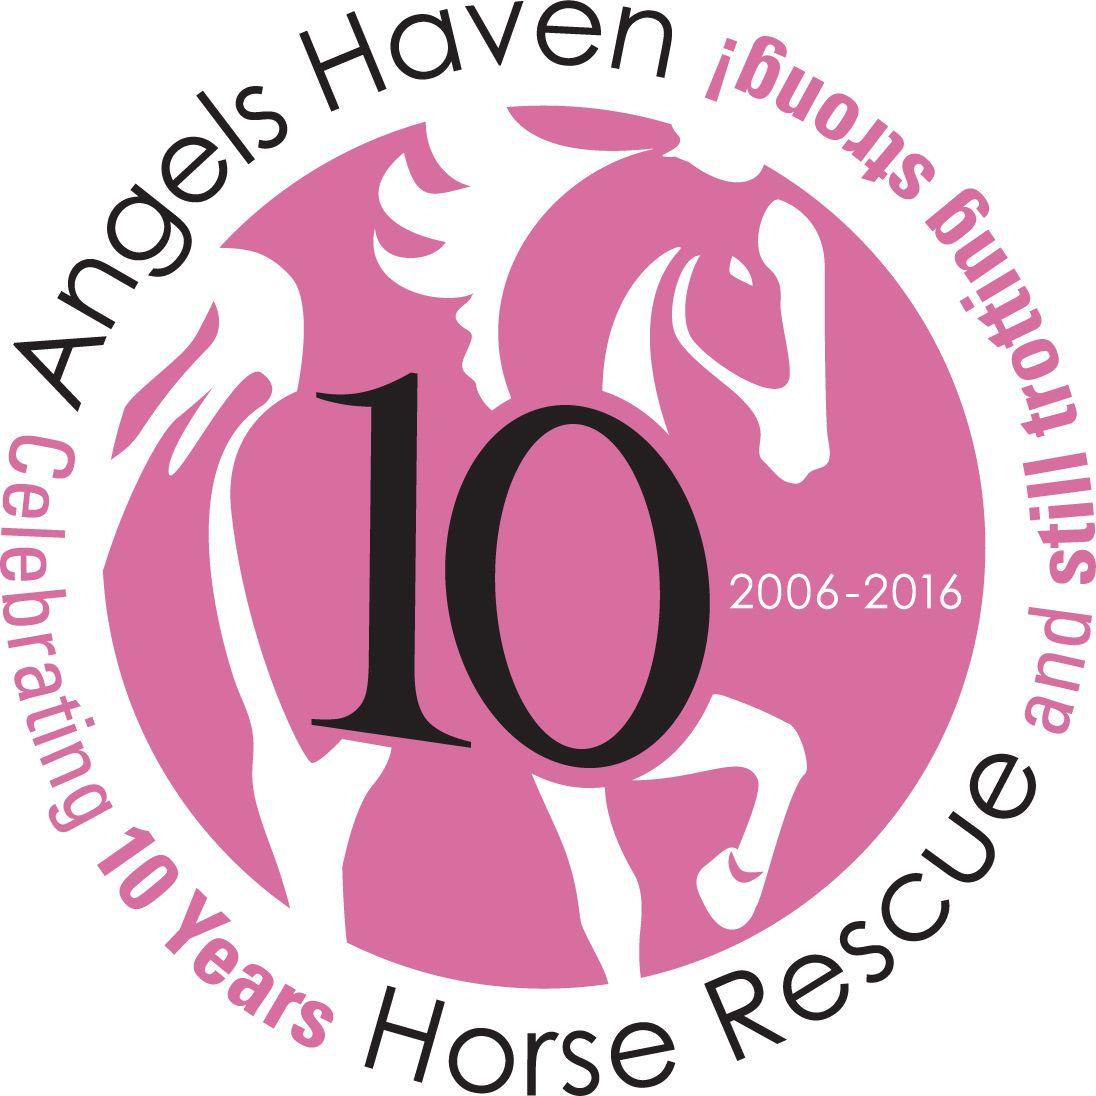 Horse Rescue Logo - Angels Haven Horse Rescue | Angels Haven Horse Rescue's mission is ...